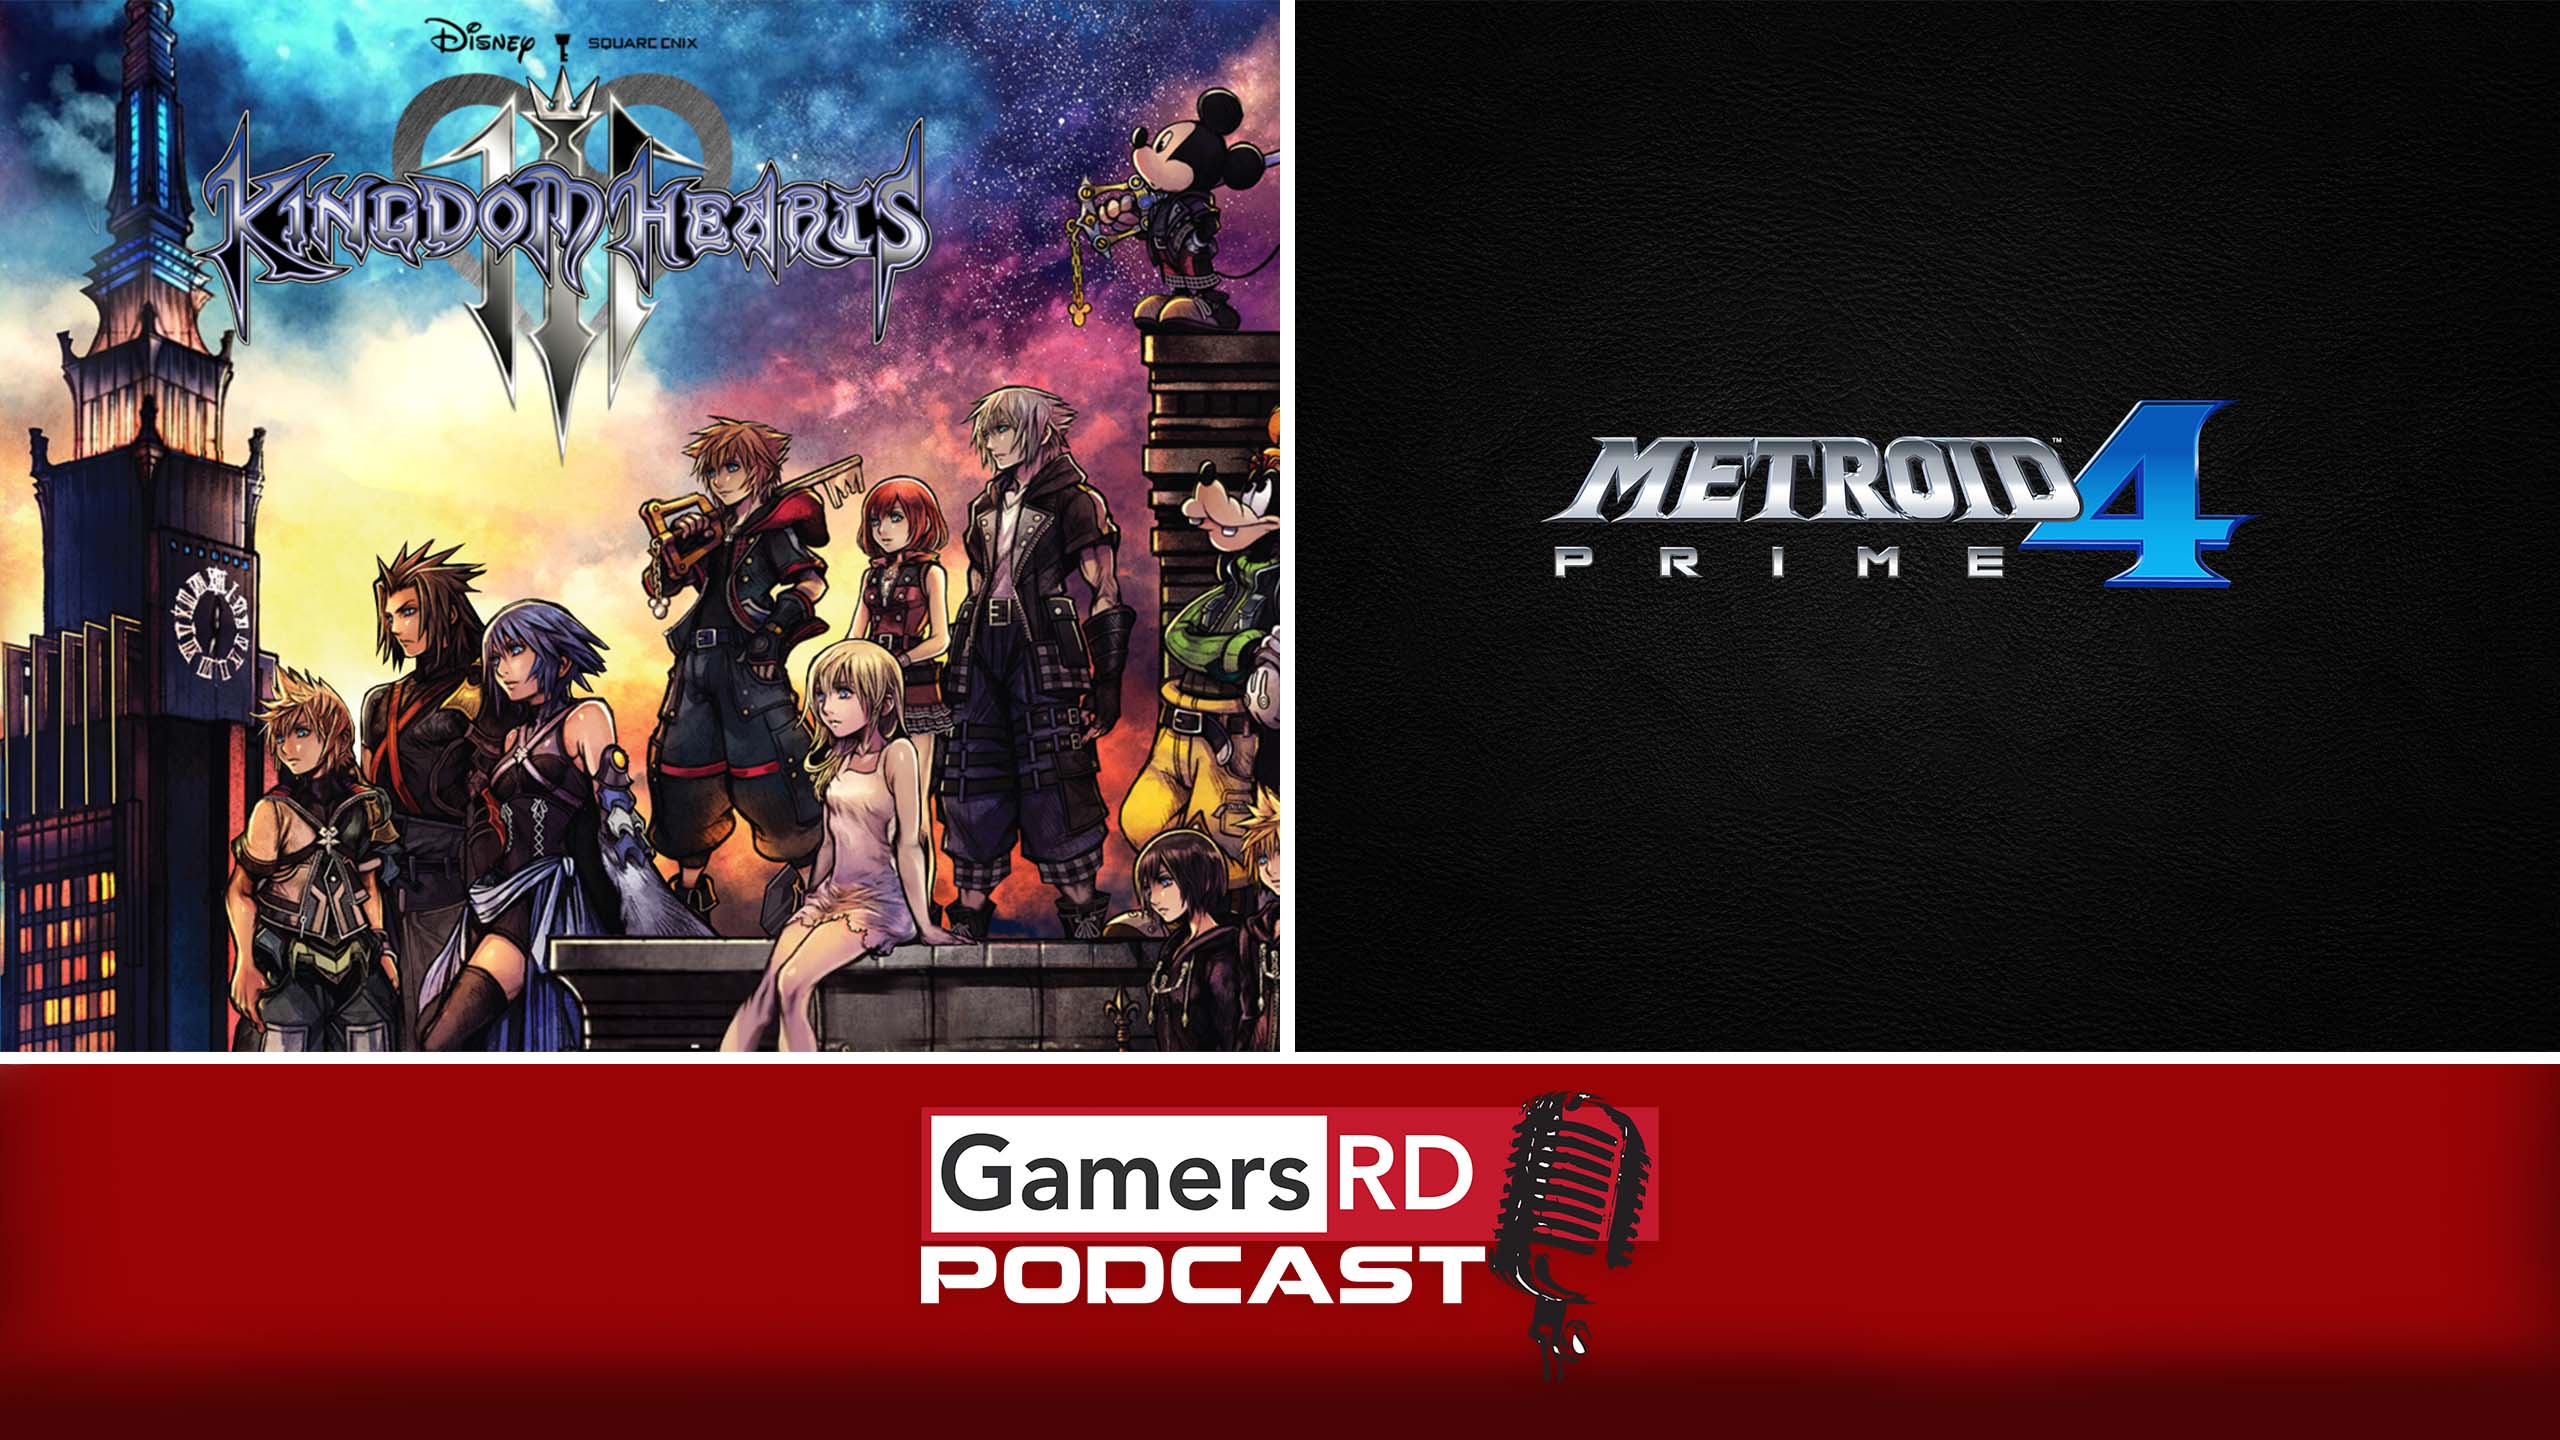 GamersRD Podcast #52, Kingdom Hearts 3, Metroid Prime 4, Nintendo, Square Enix, review